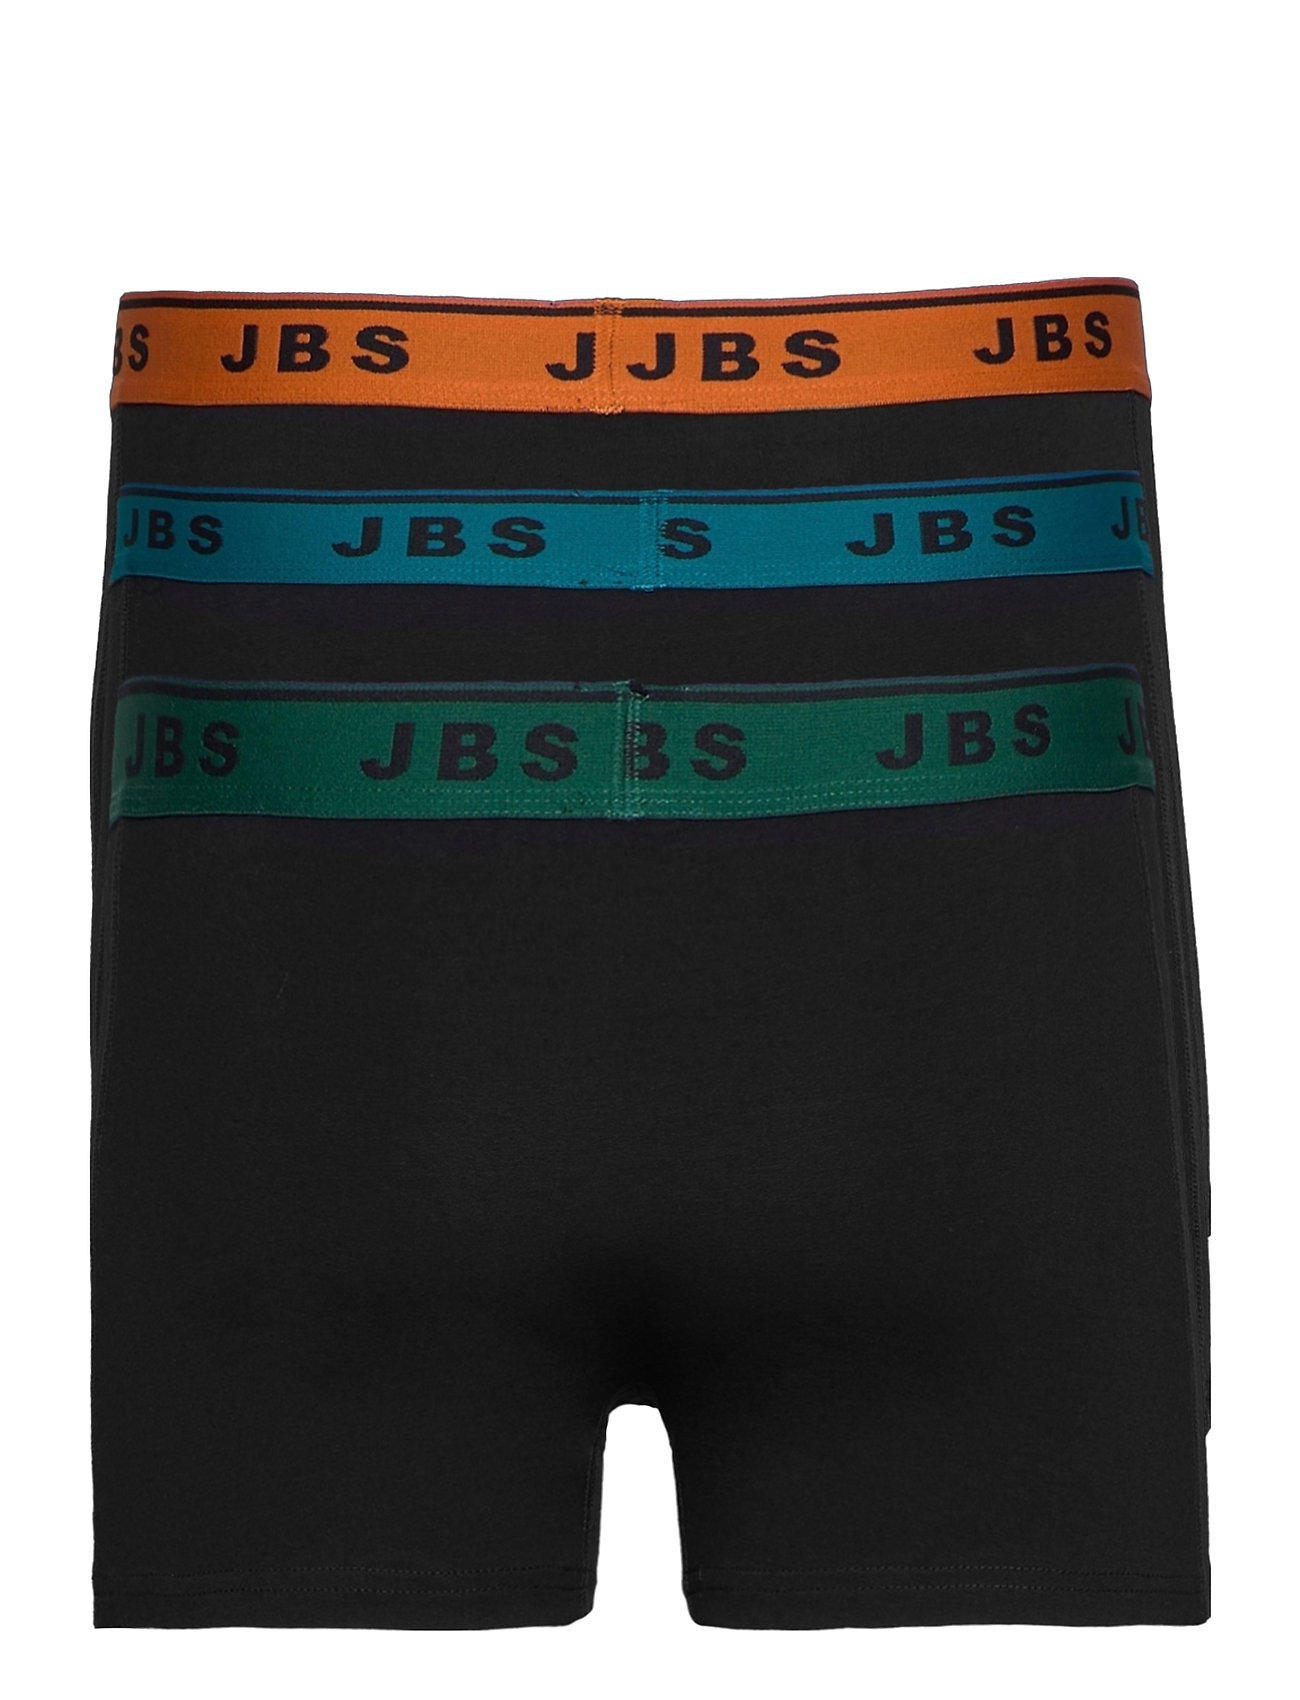 JBS - JBS tights 3-pack, GOTS - madalaimad hinnad - svart - 1